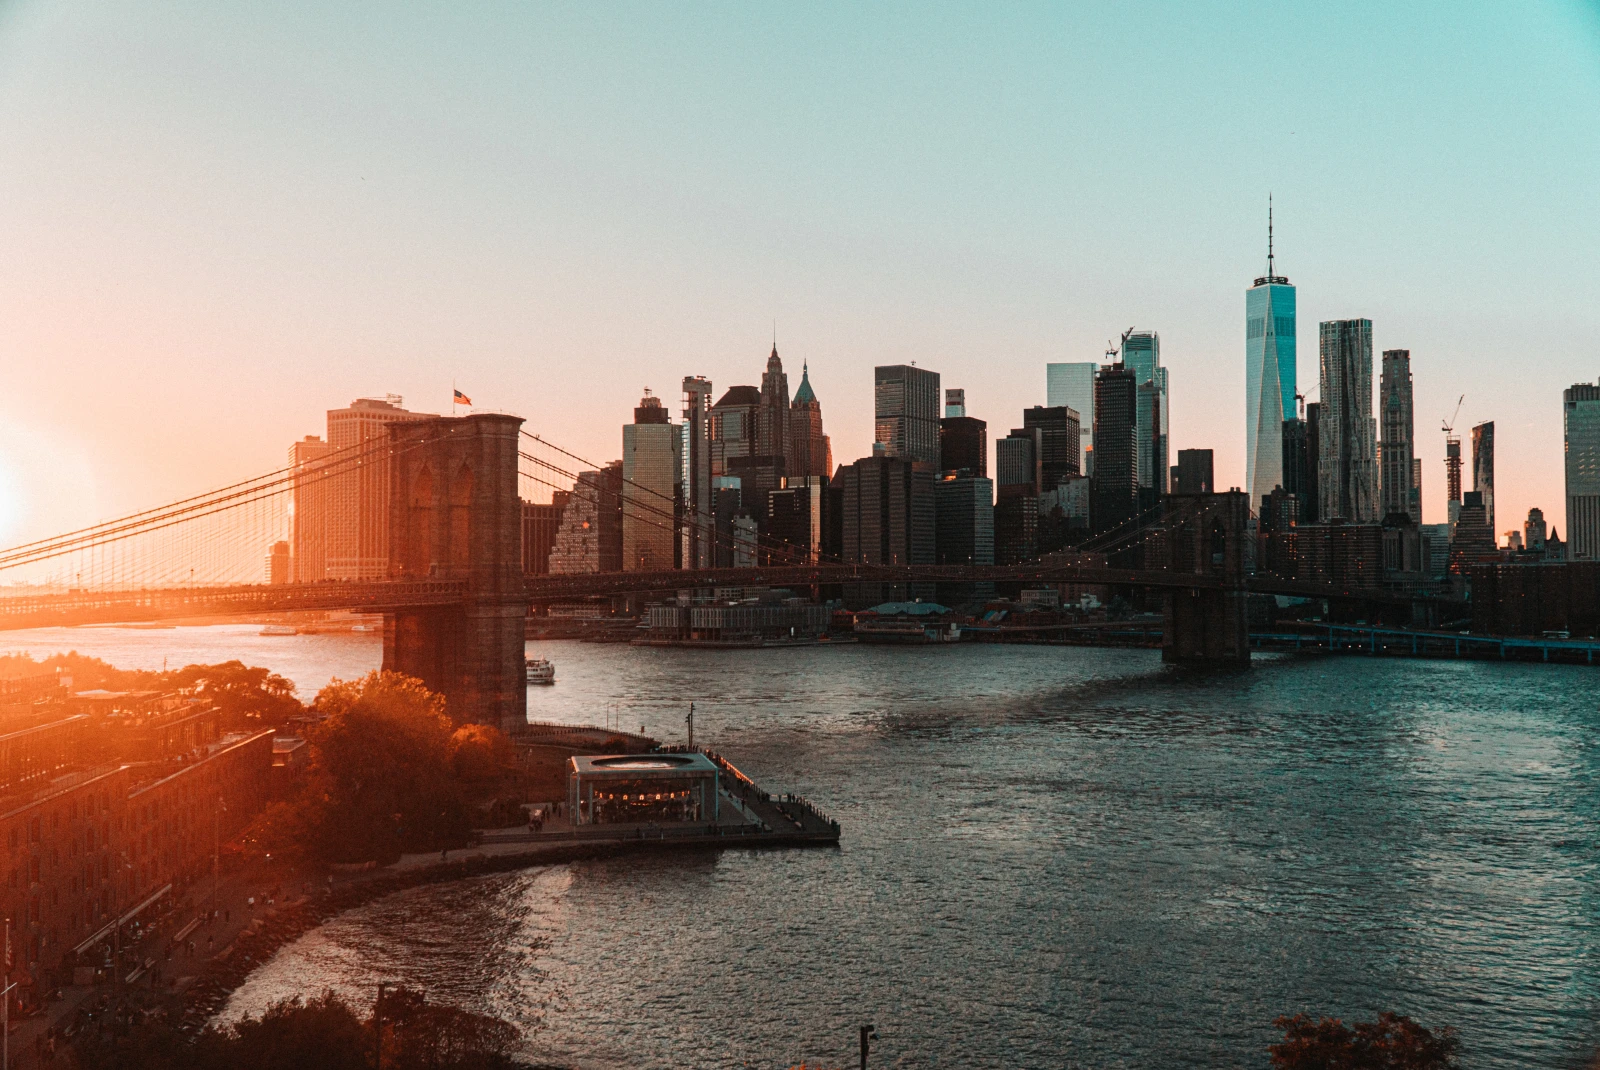 Brooklyn Bridge with NYC skyline at sunset. 